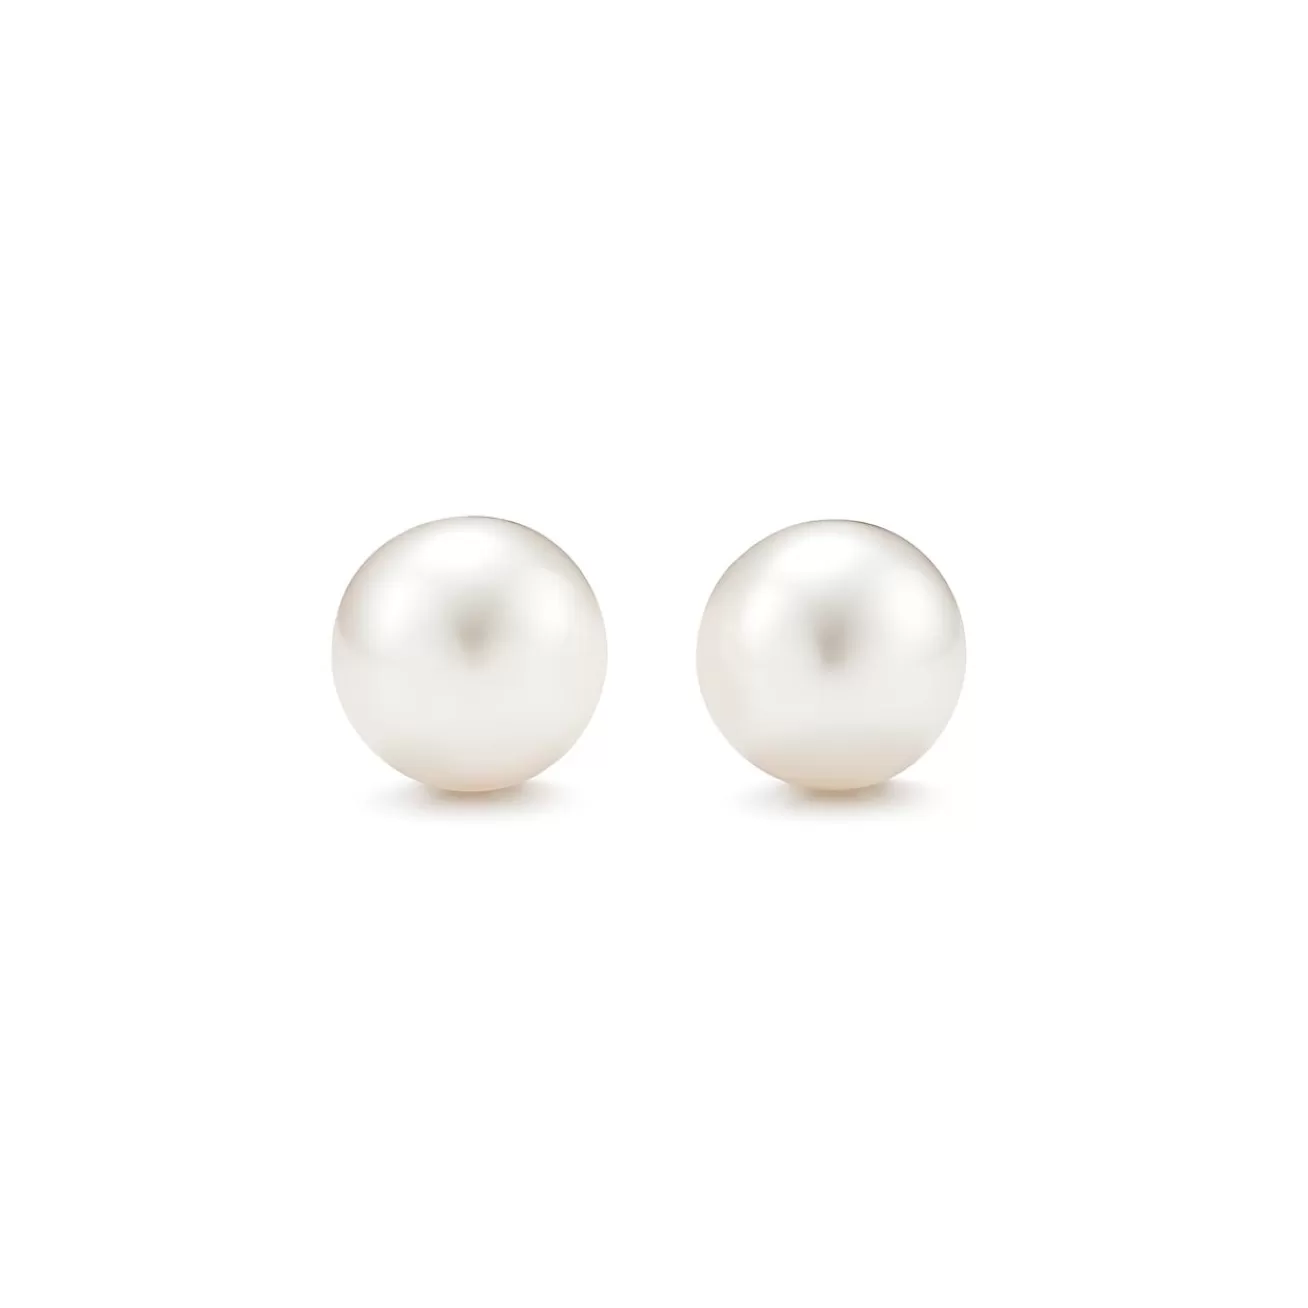 Tiffany & Co. Earrings in sterling silver with freshwater cultured pearls, for pierced ears. Pearls, 8-9 mm. | ^ Earrings | Sterling Silver Jewelry